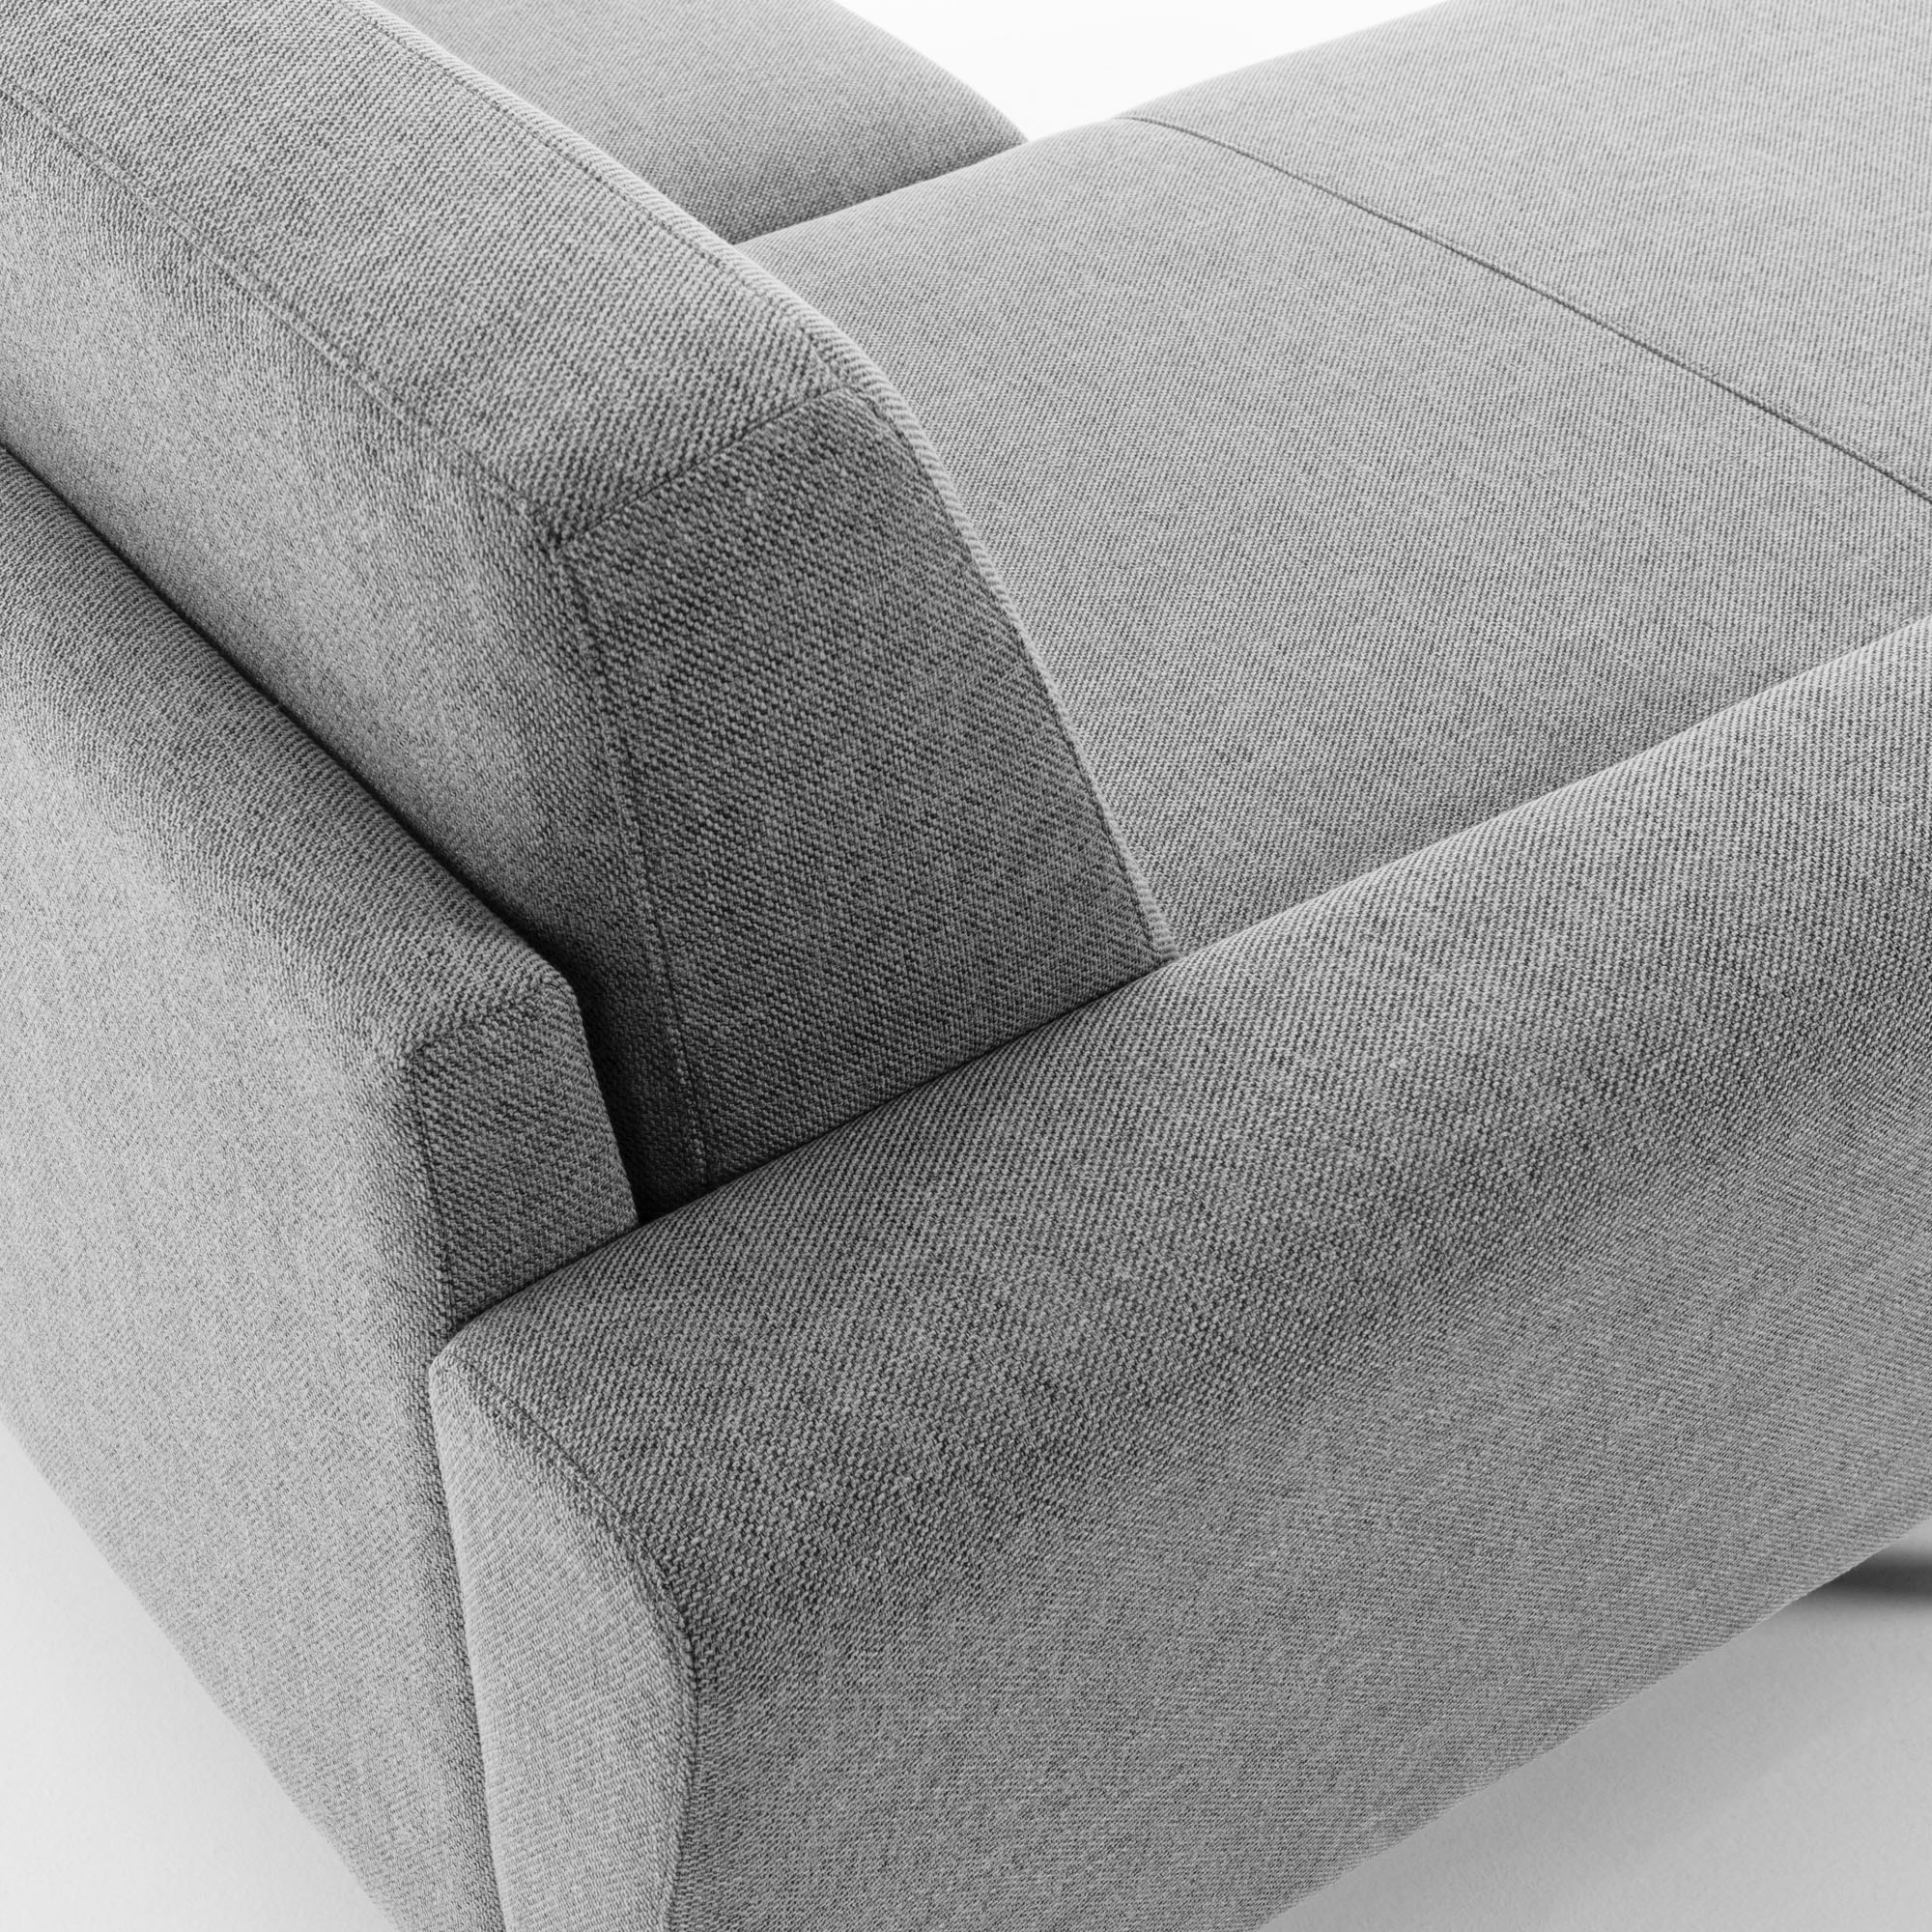 GUY Sofa chaise longue 2 seaters wood fabric grey